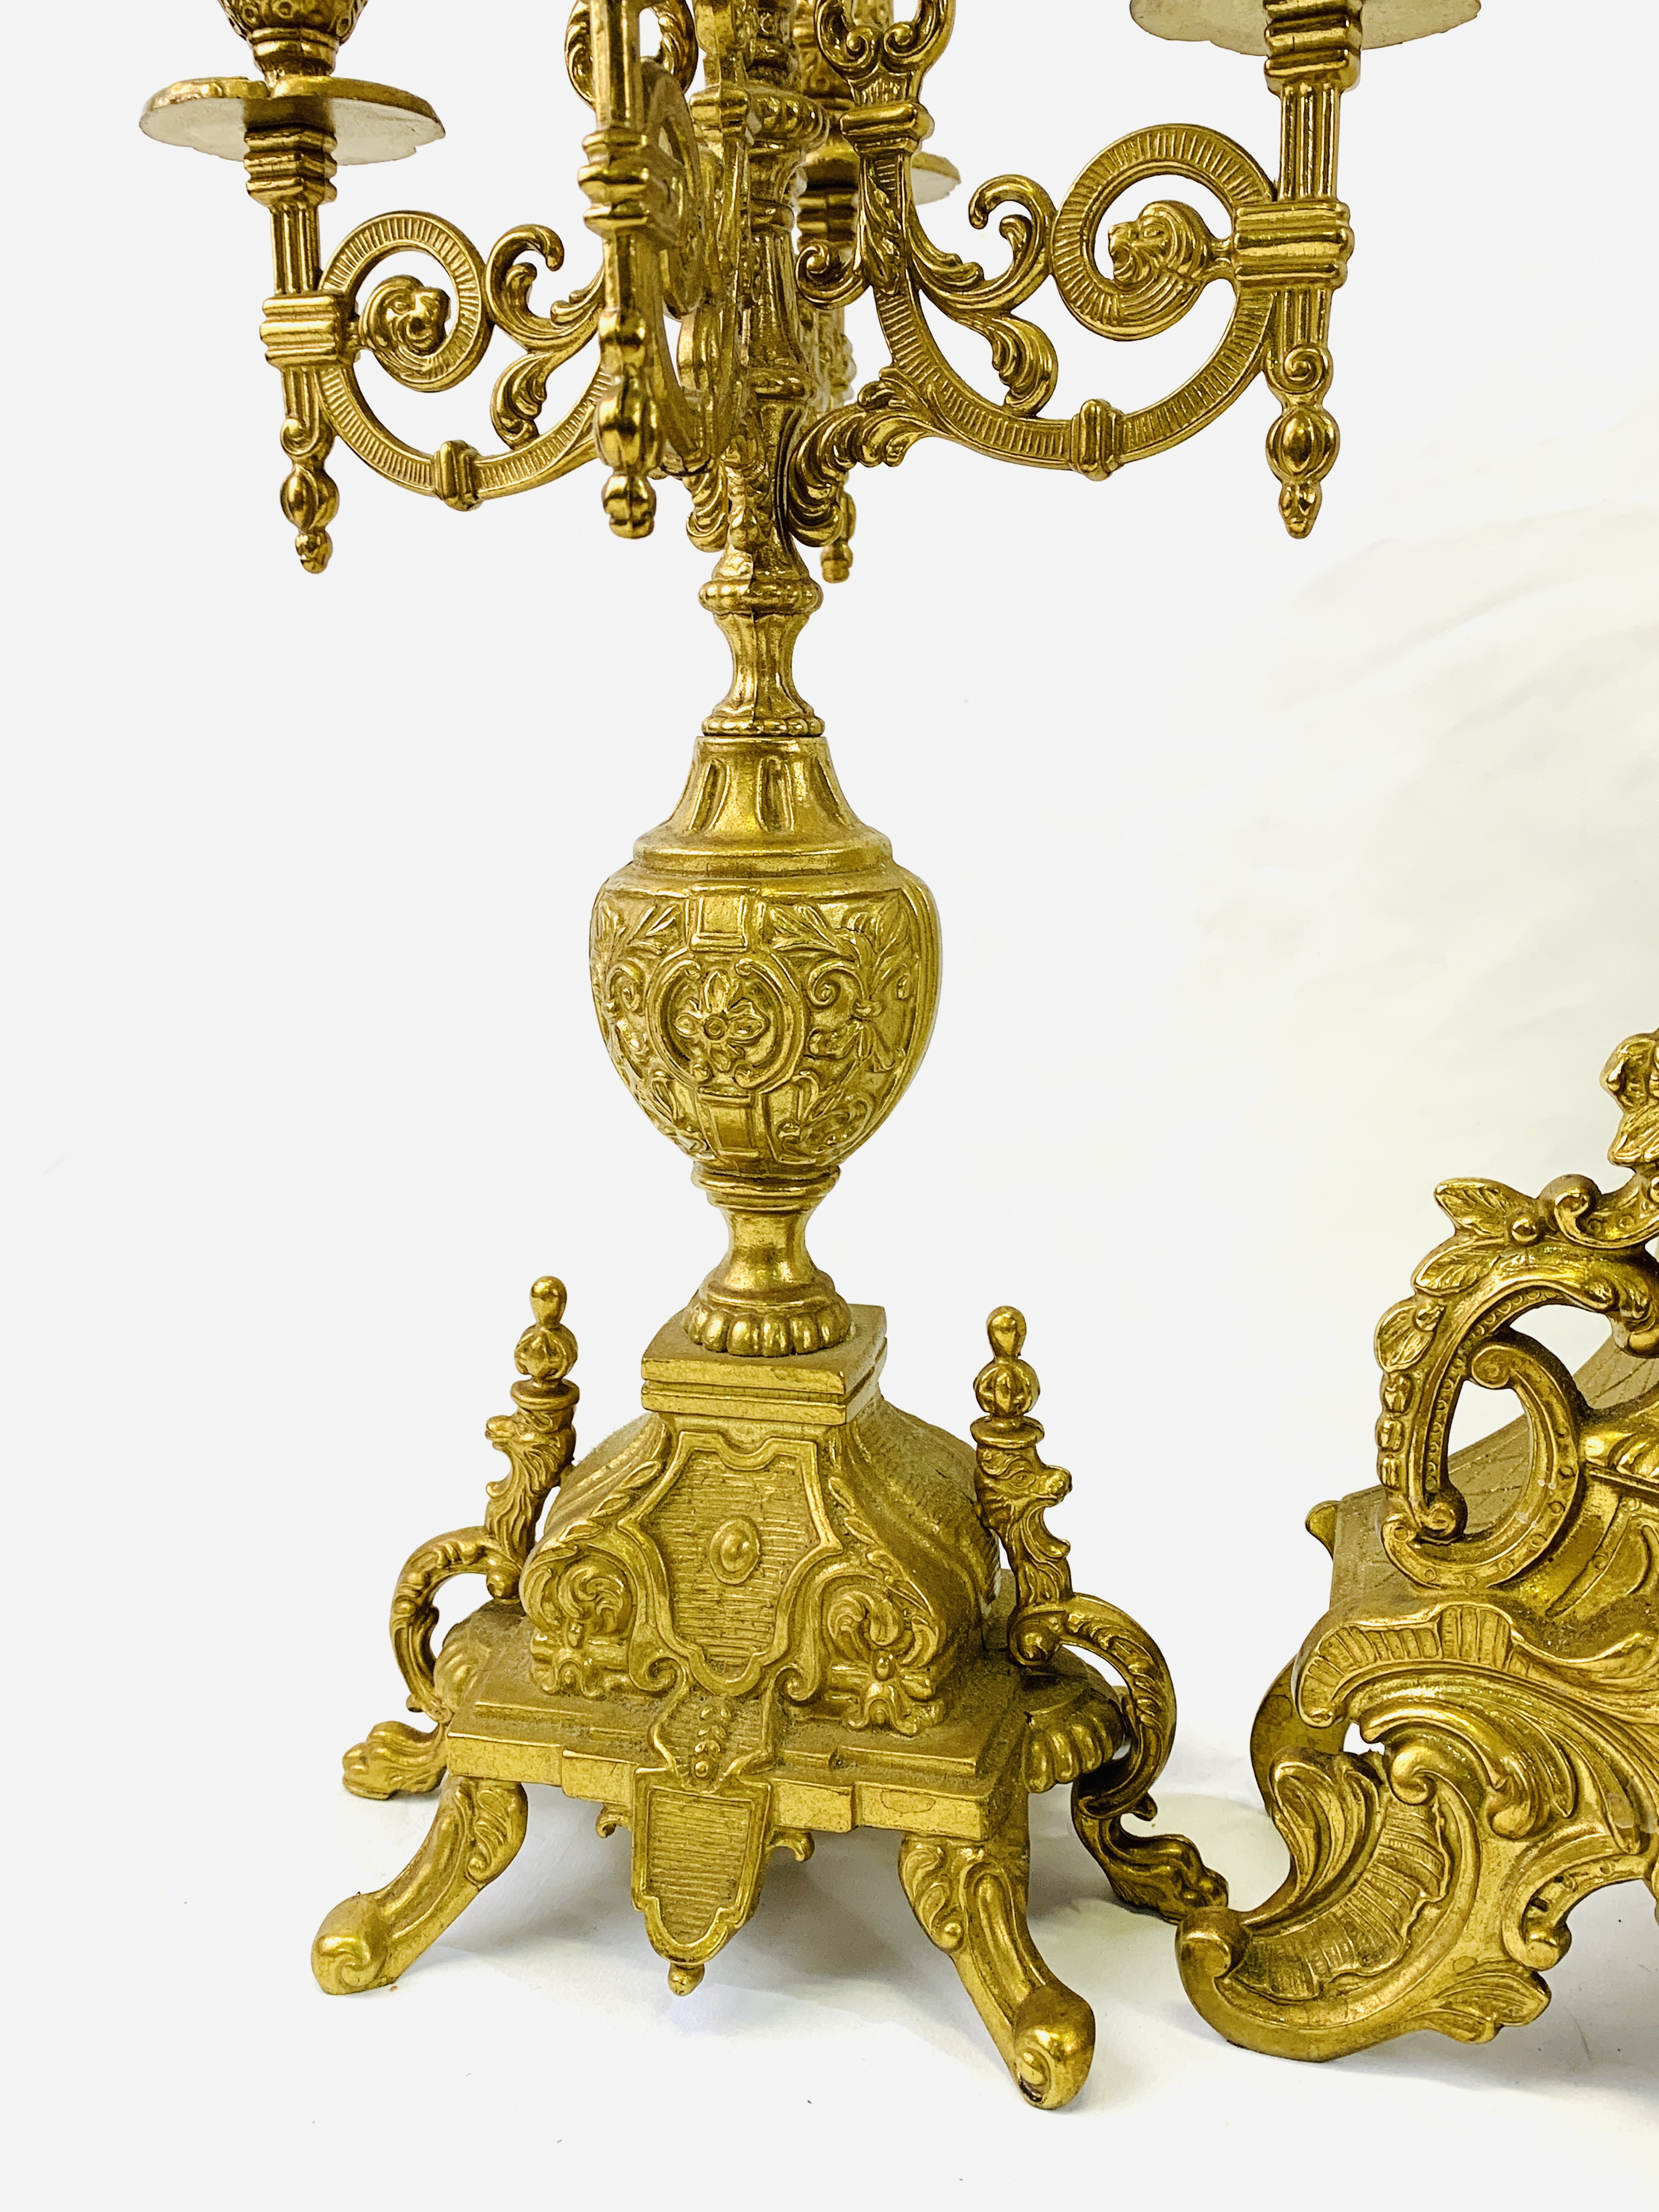 A brass mantel clock and candelabra garniture set - Image 6 of 8